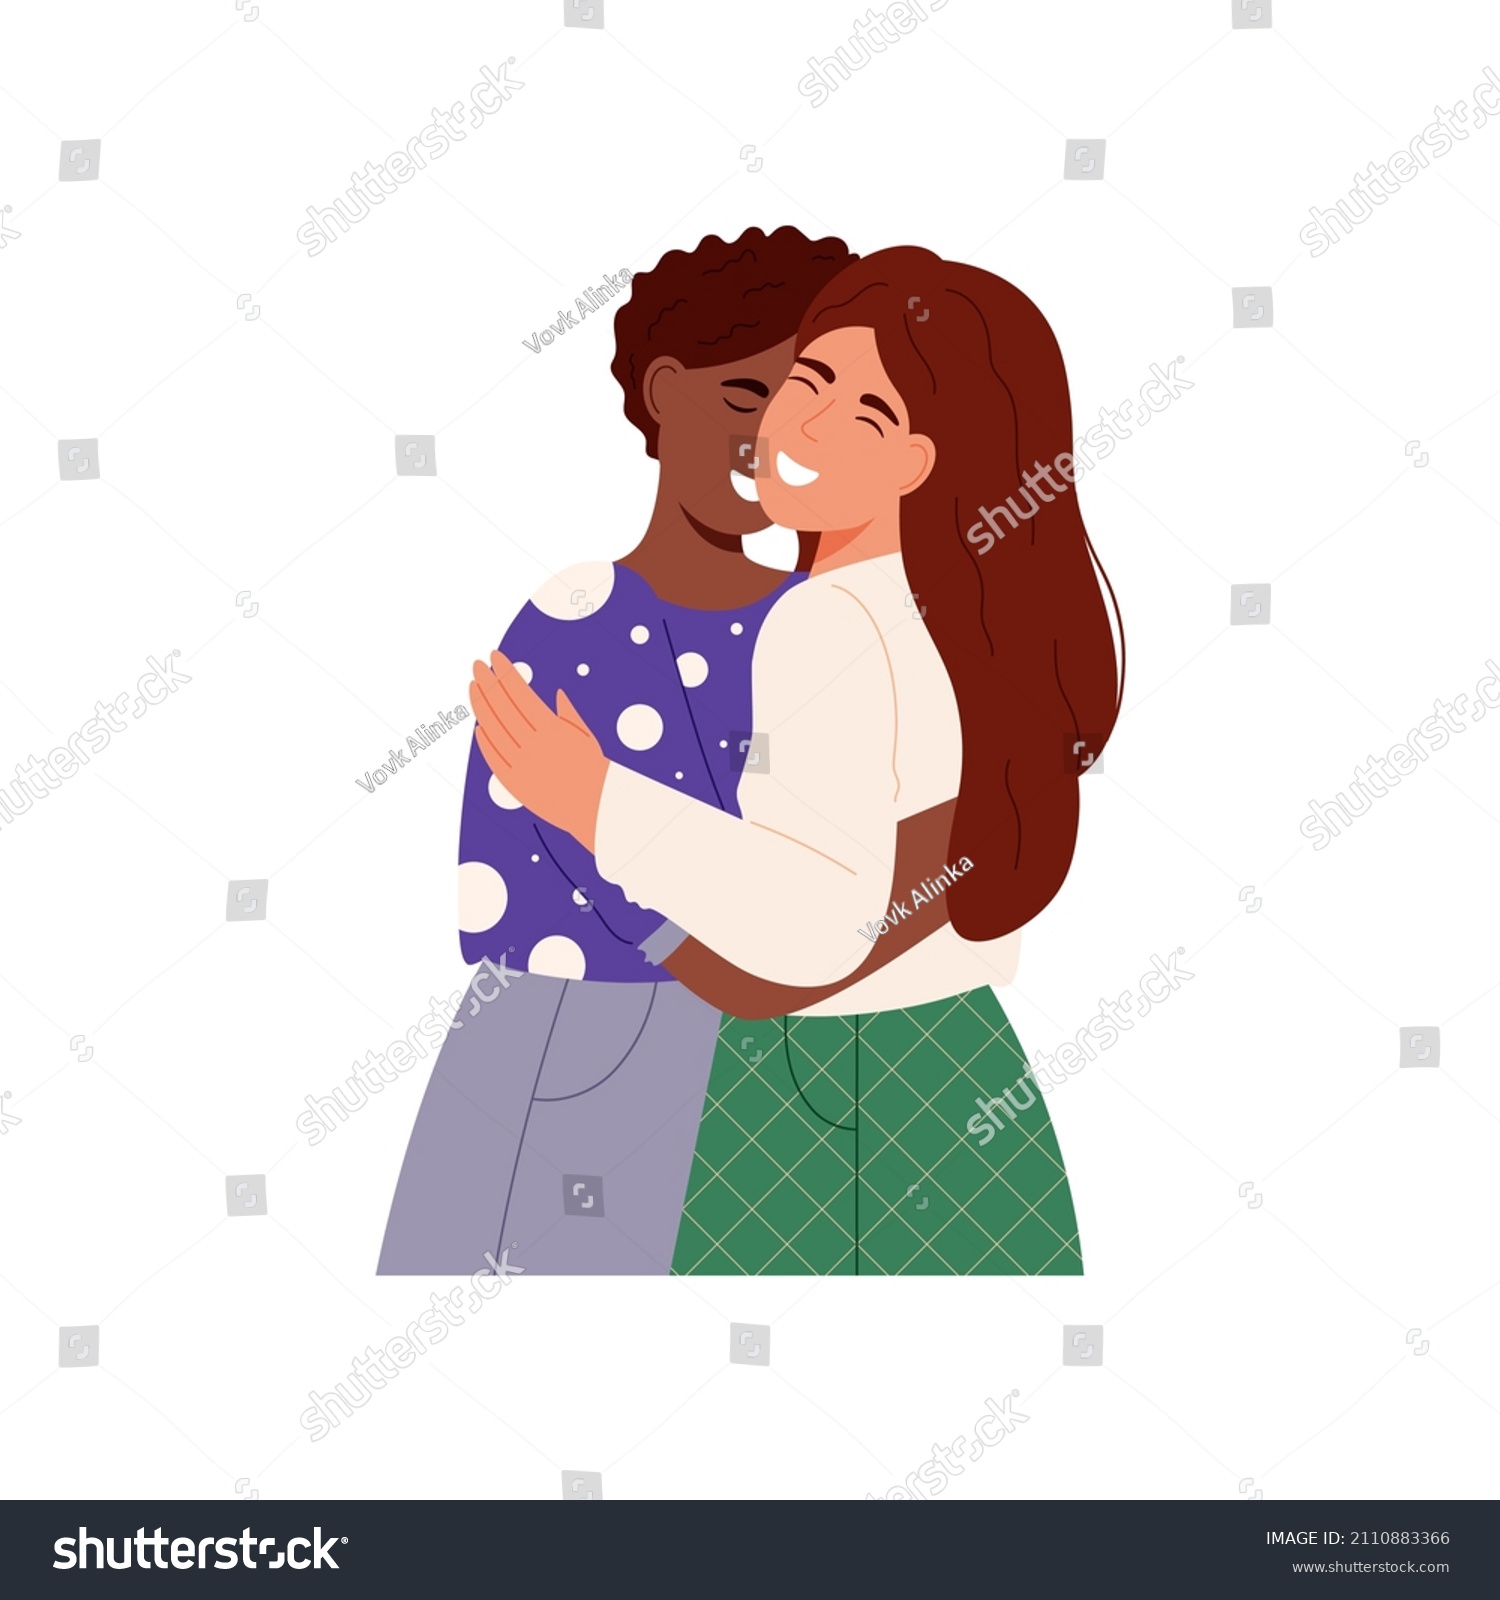 Vector Illustration Two Hugging Girls Friendship Stock Vector Royalty Free 2110883366 